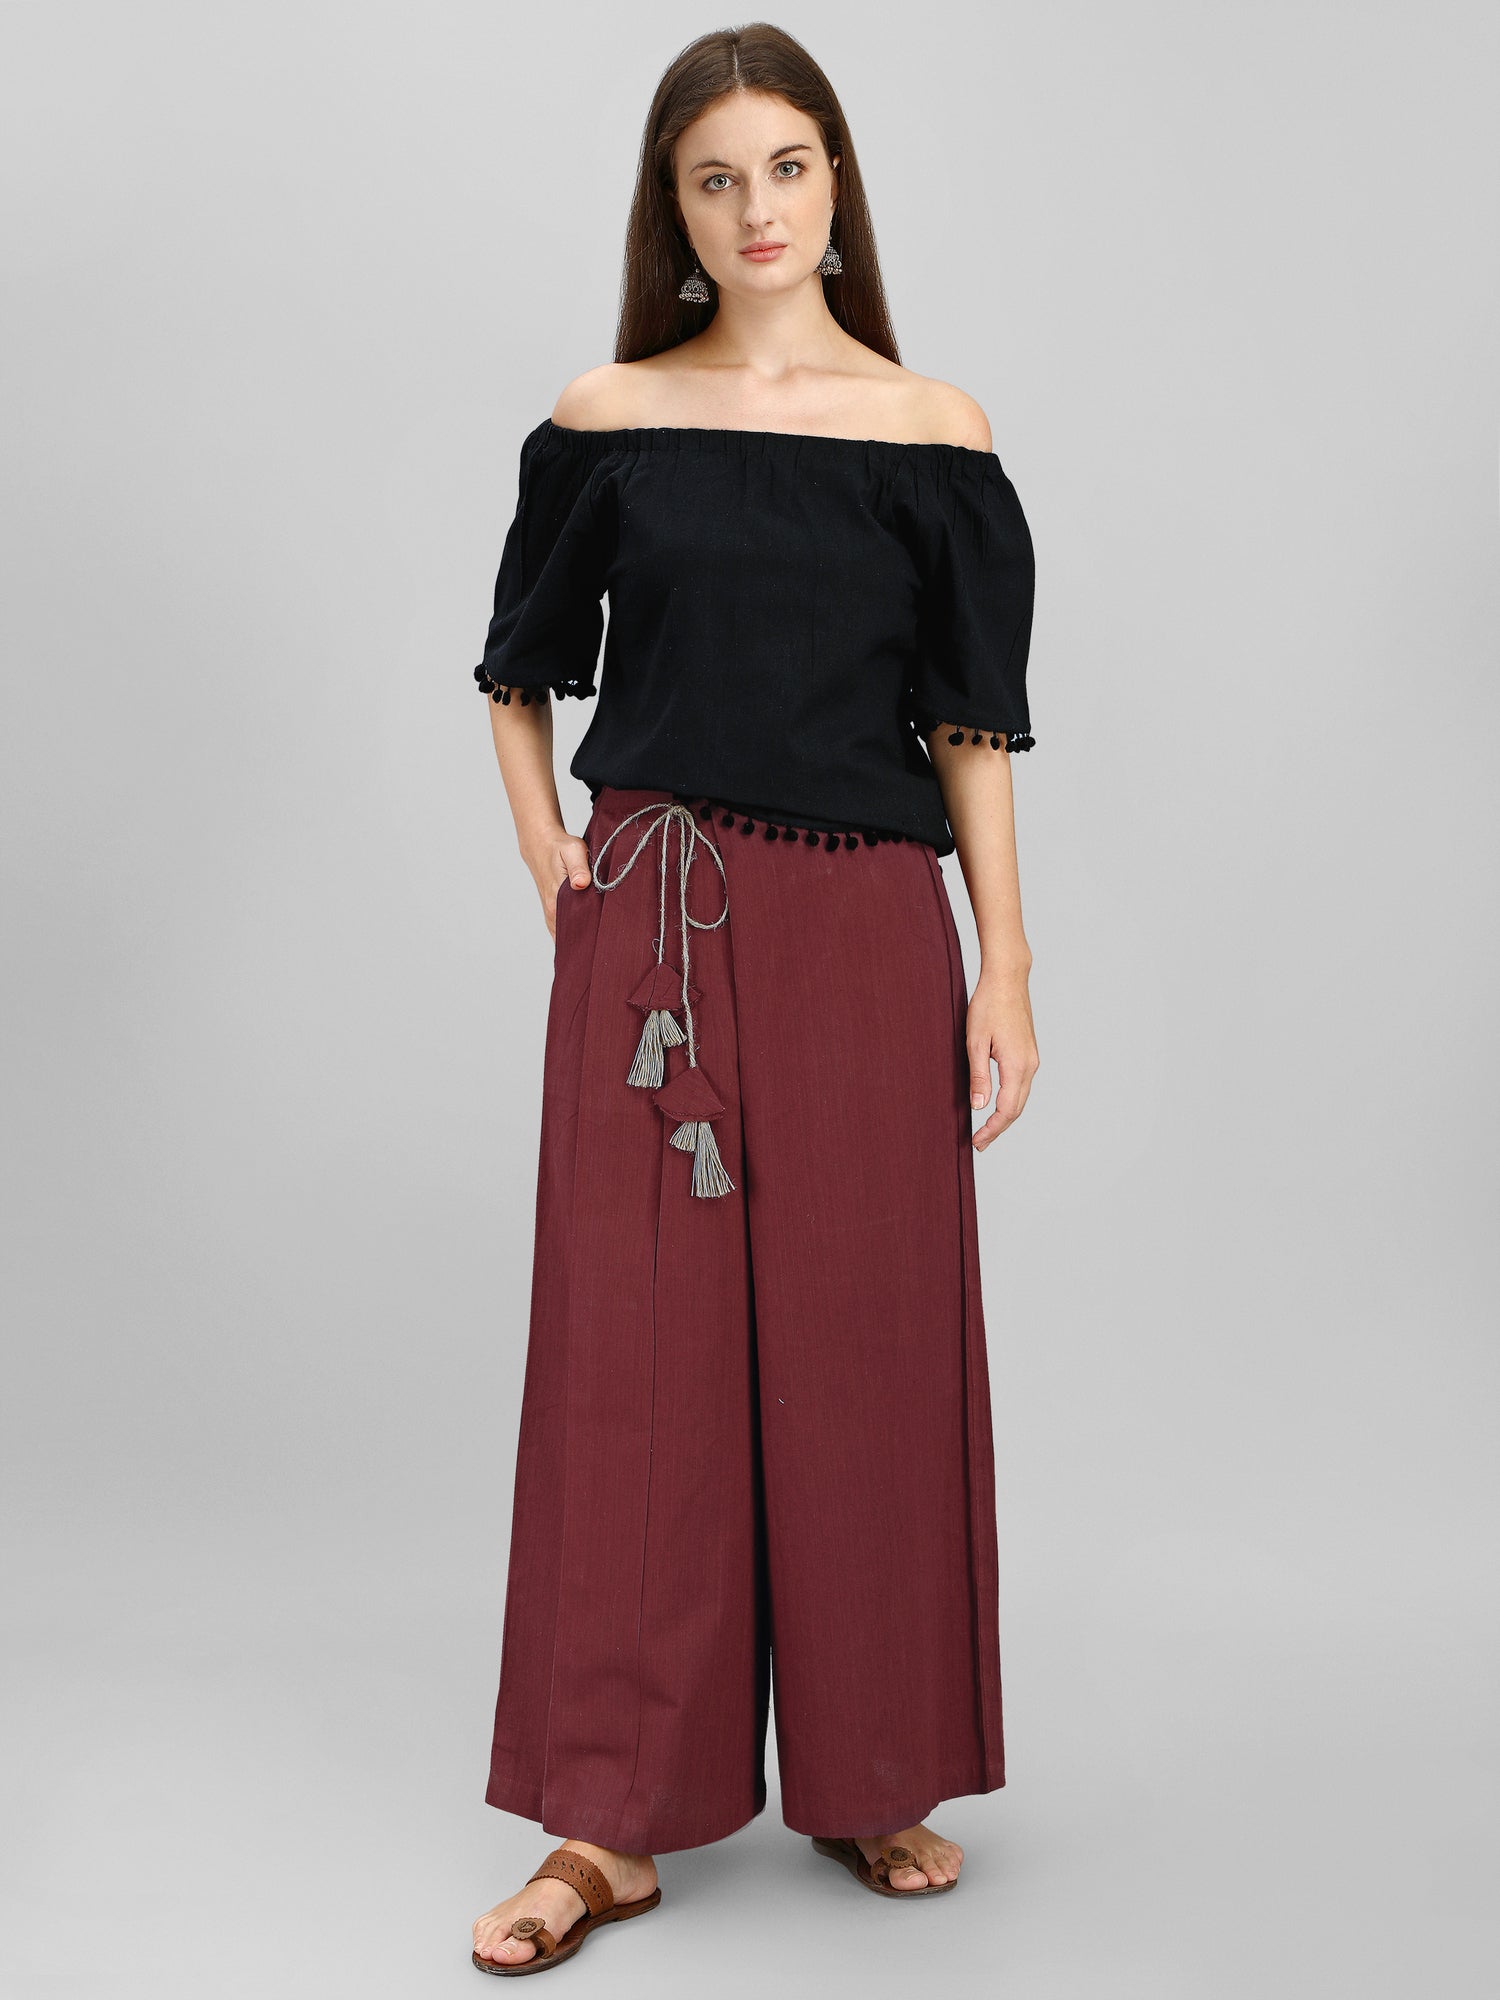 Women's Wine Skirt Pants Co-ordinated Set With Black Top - MESMORA FASHION